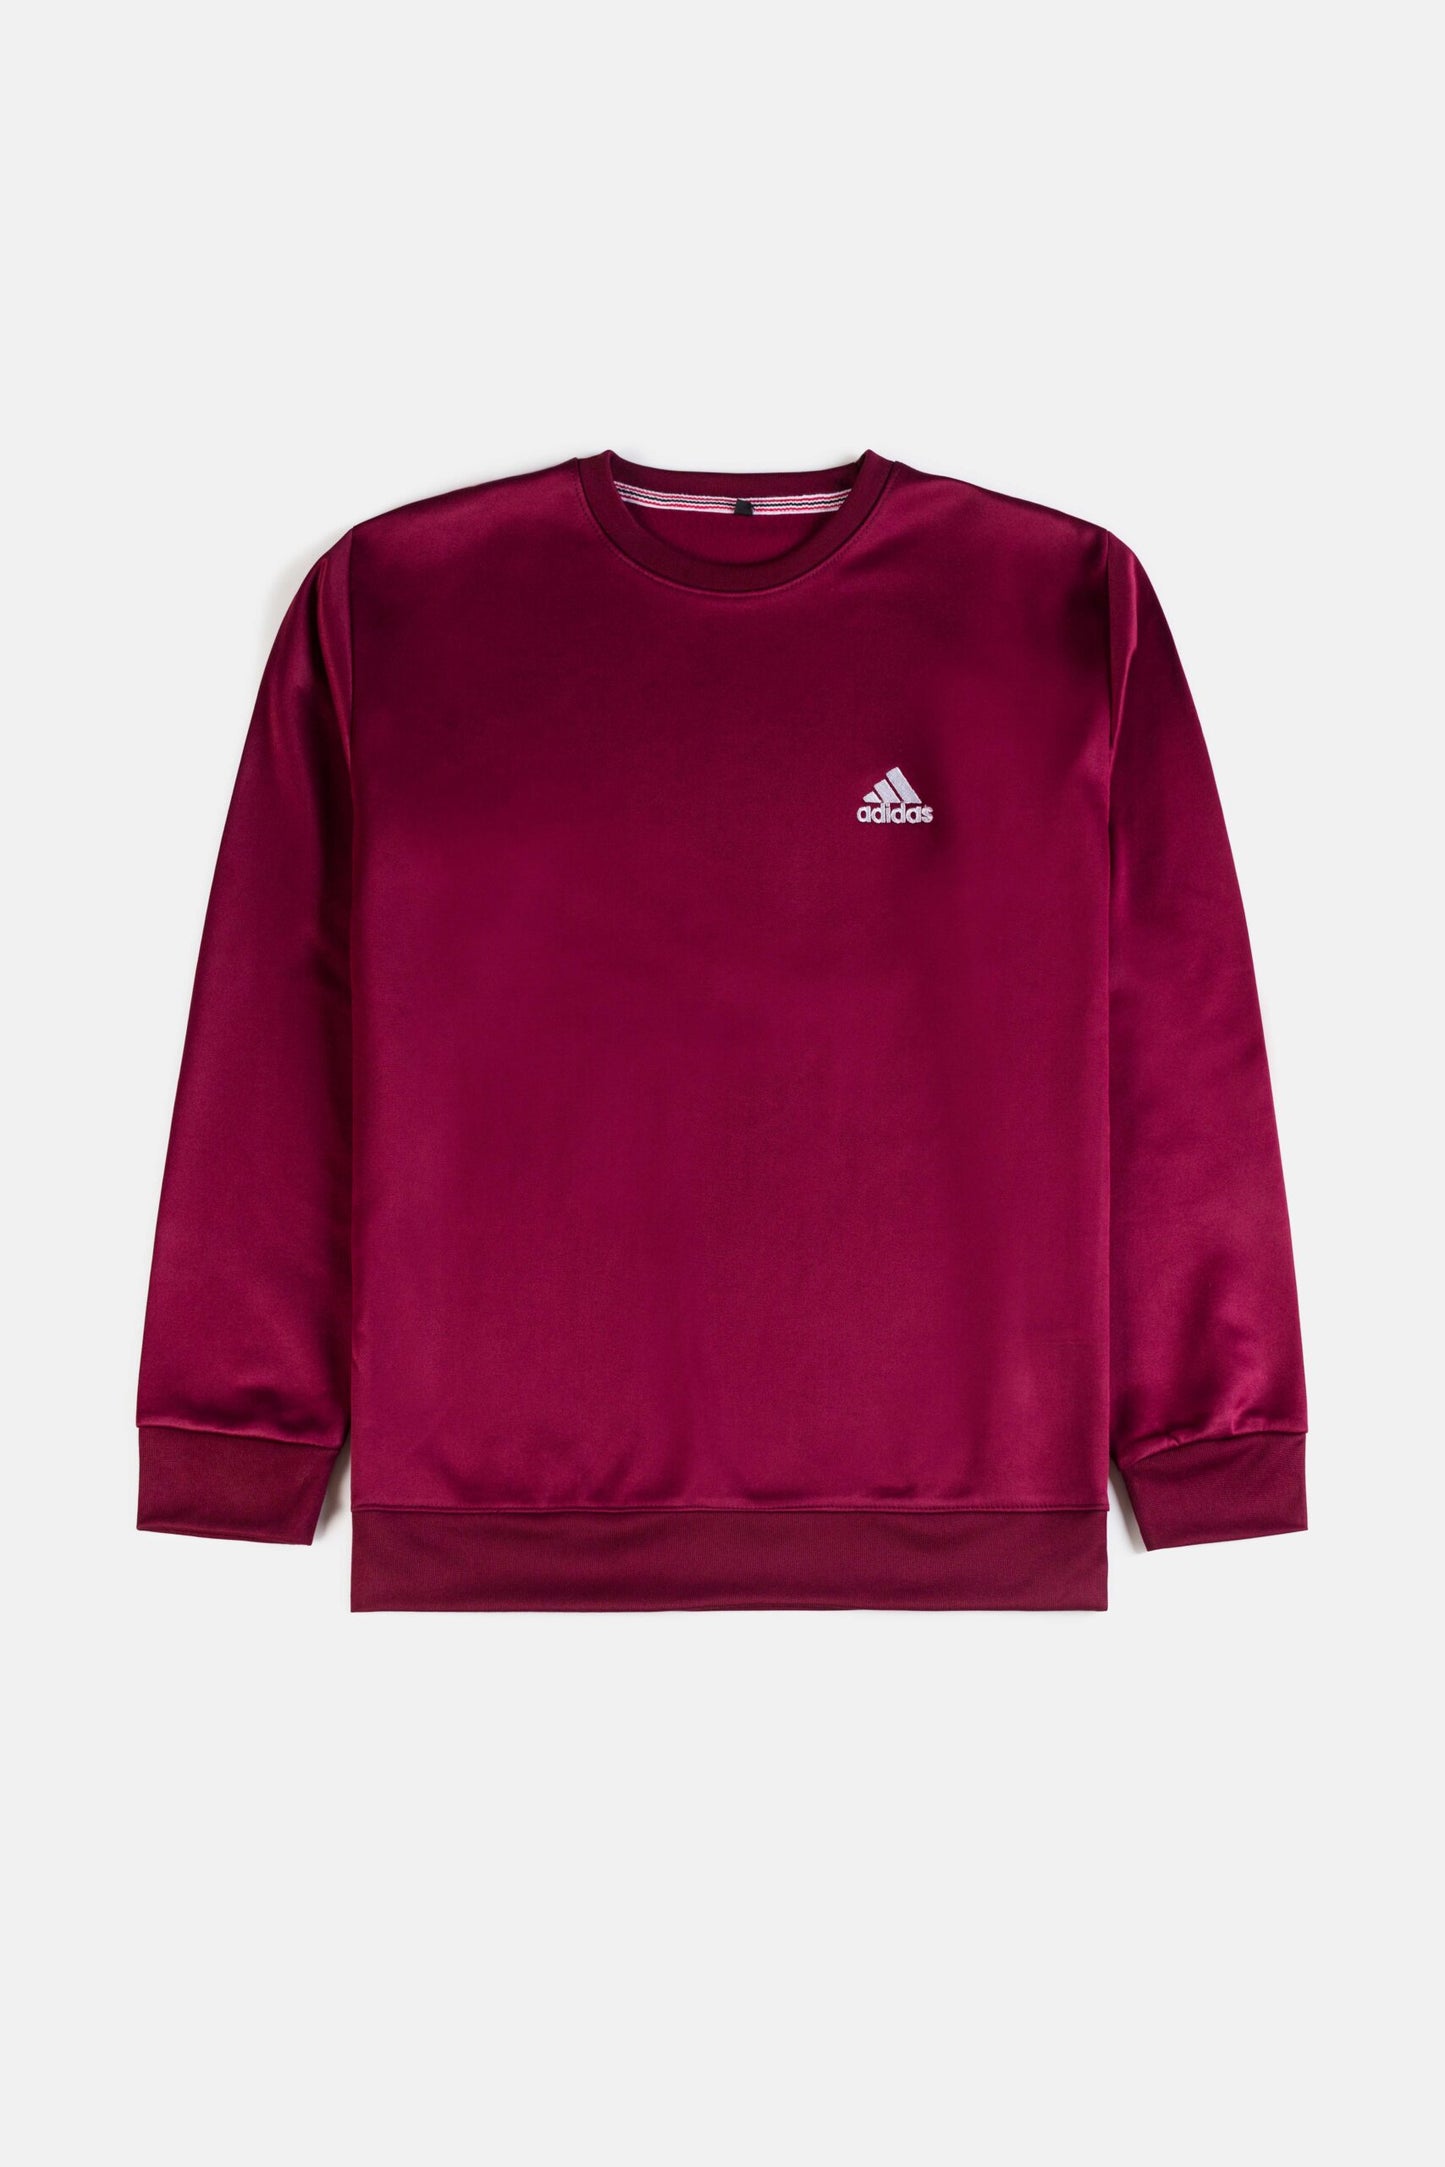 Adidas Premium Fleece Sweatshirt – Maroon